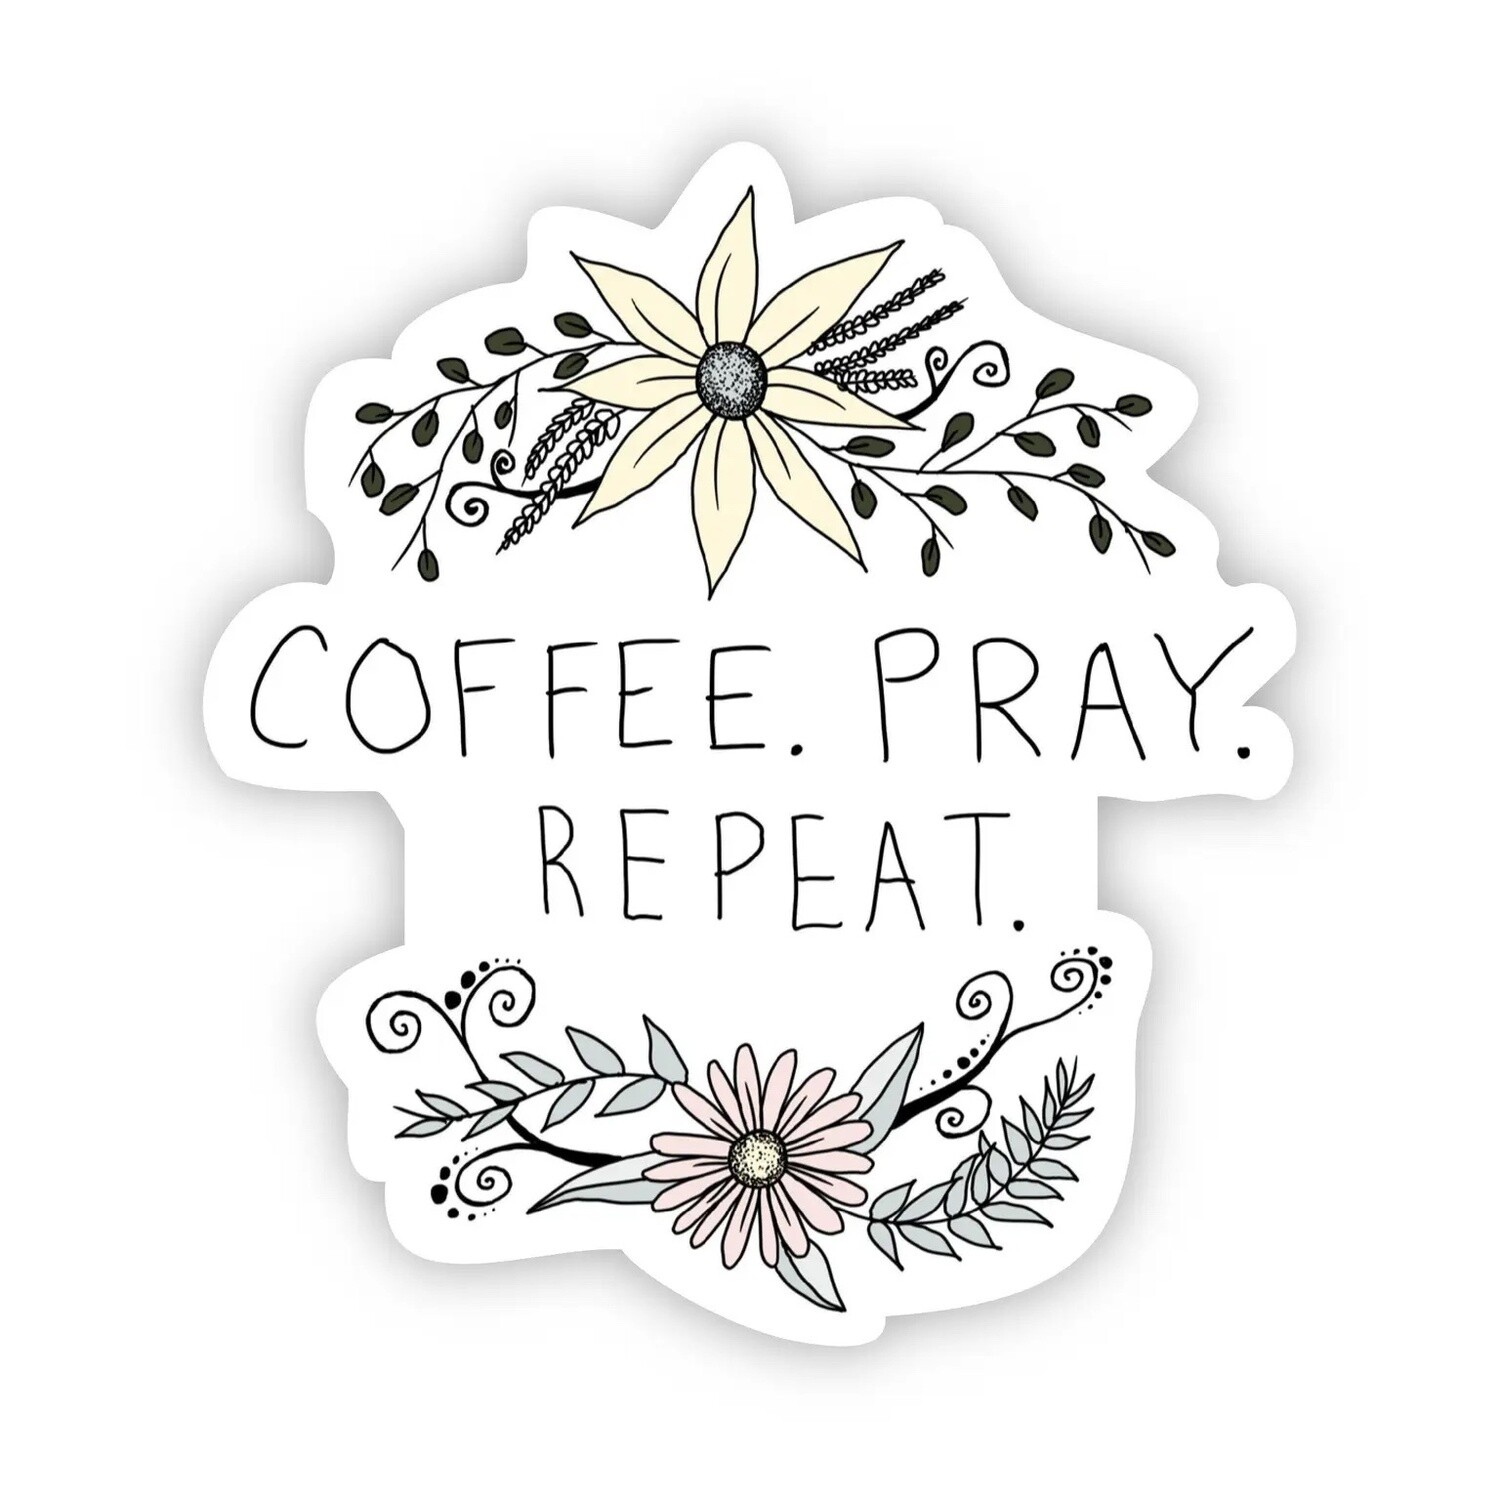 Coffee Pray Repeat Sticker (Big Moods)